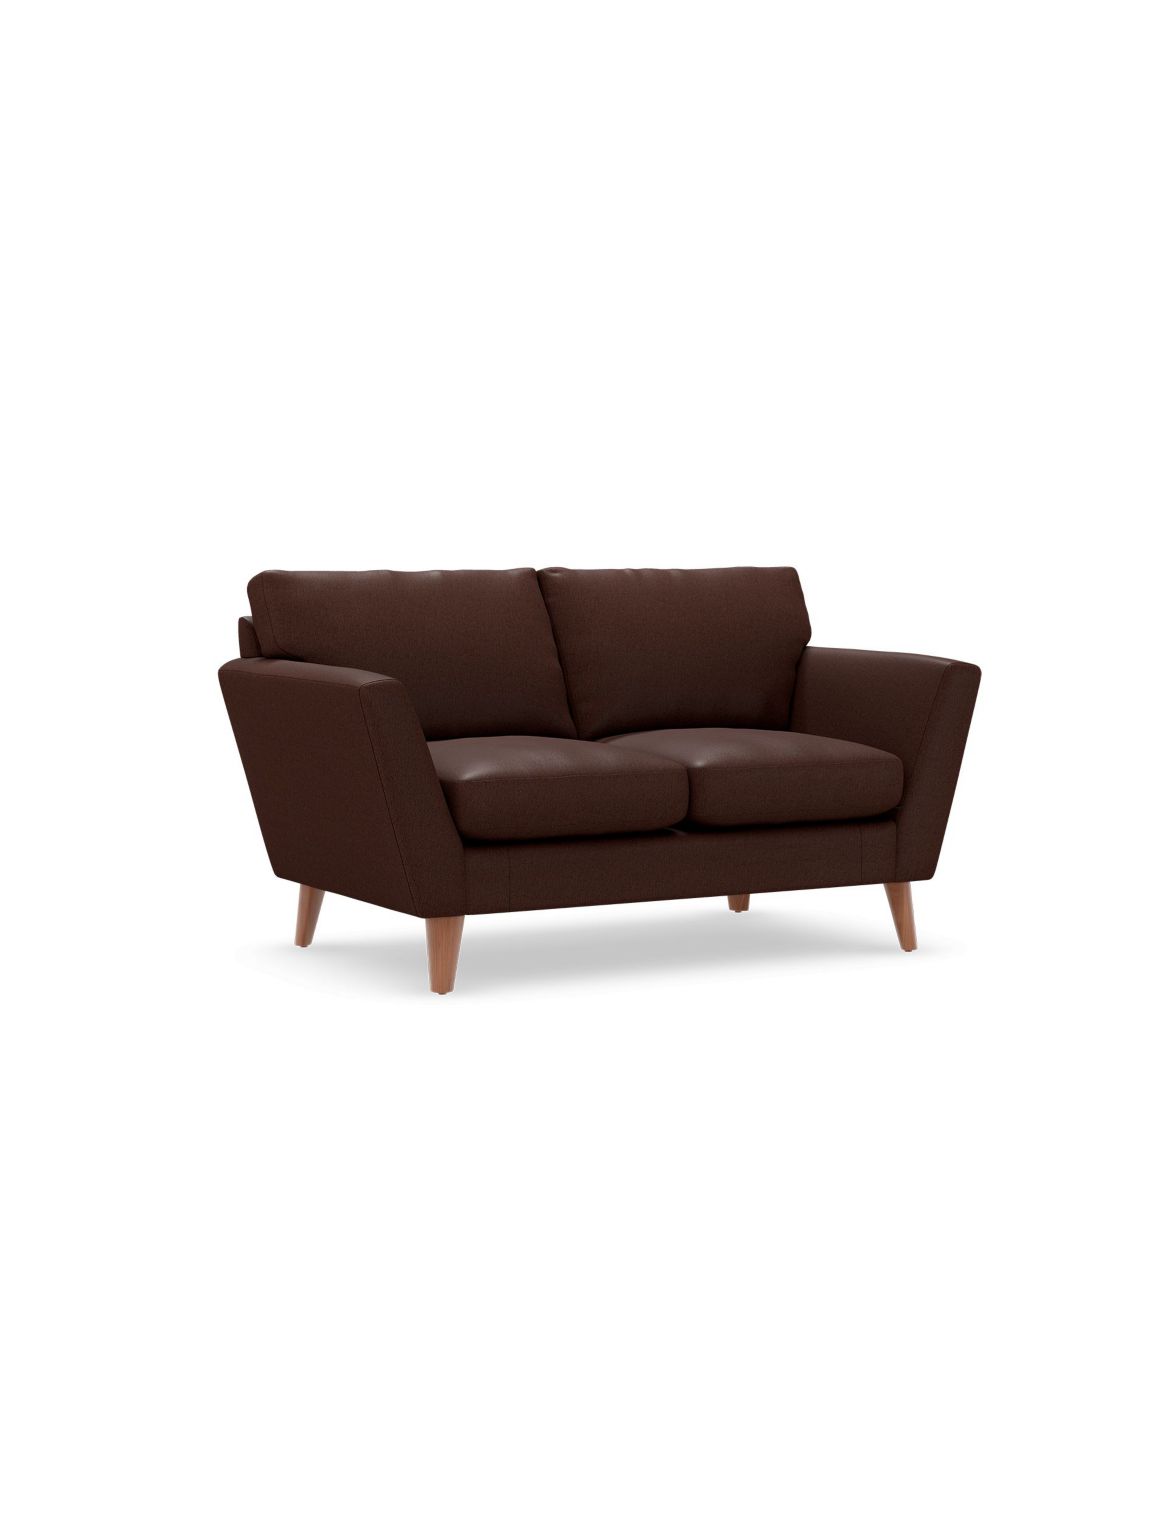 Foxbury Small Sofa brown